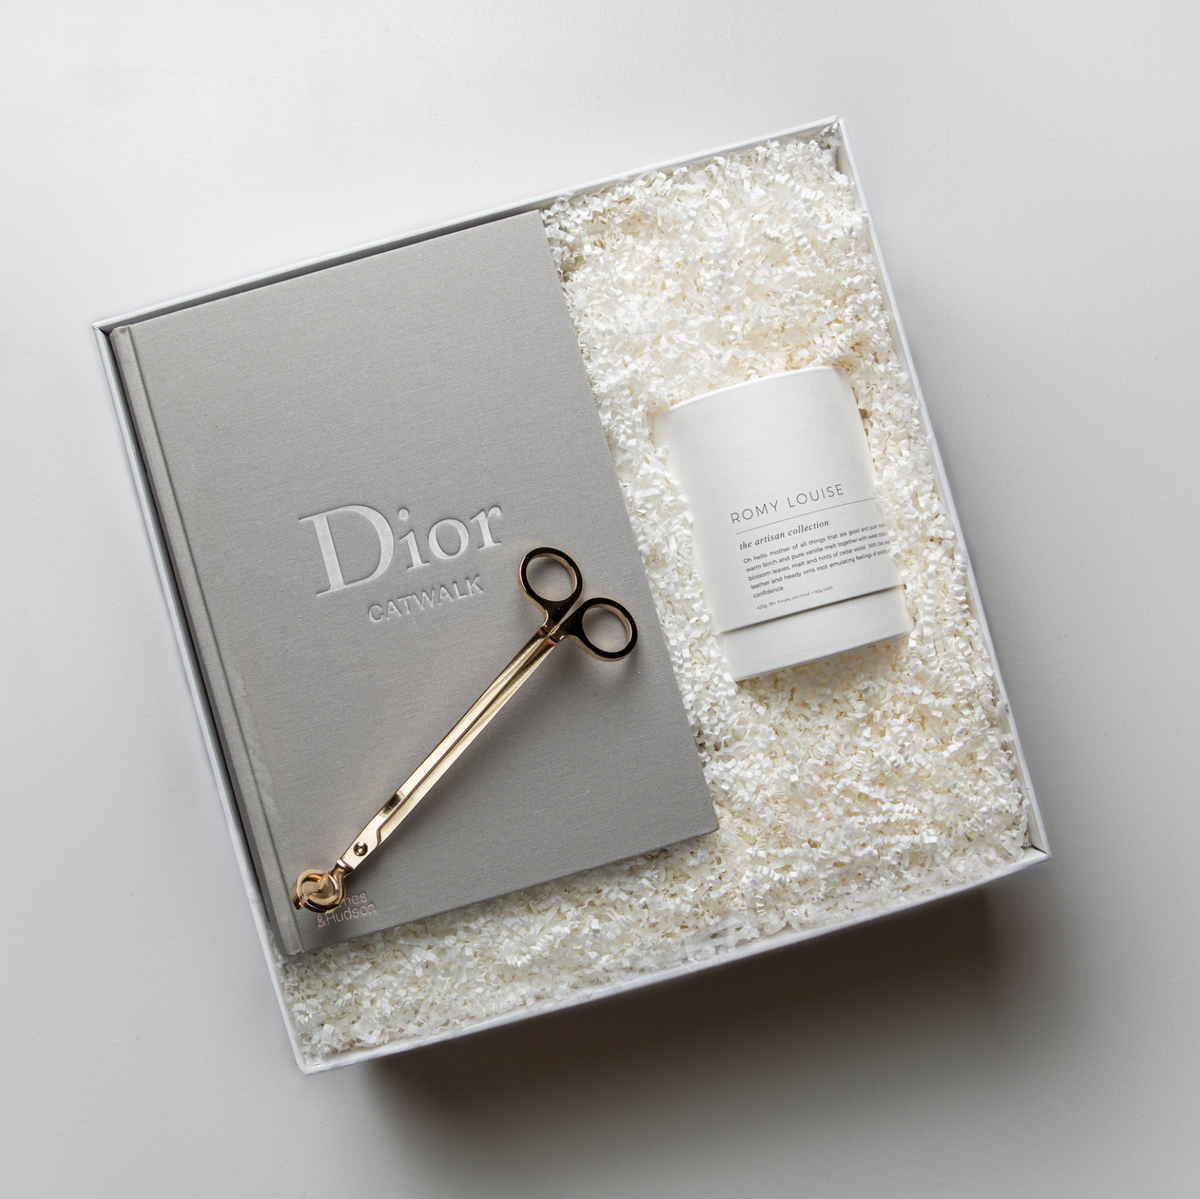 The Dior Gift Box